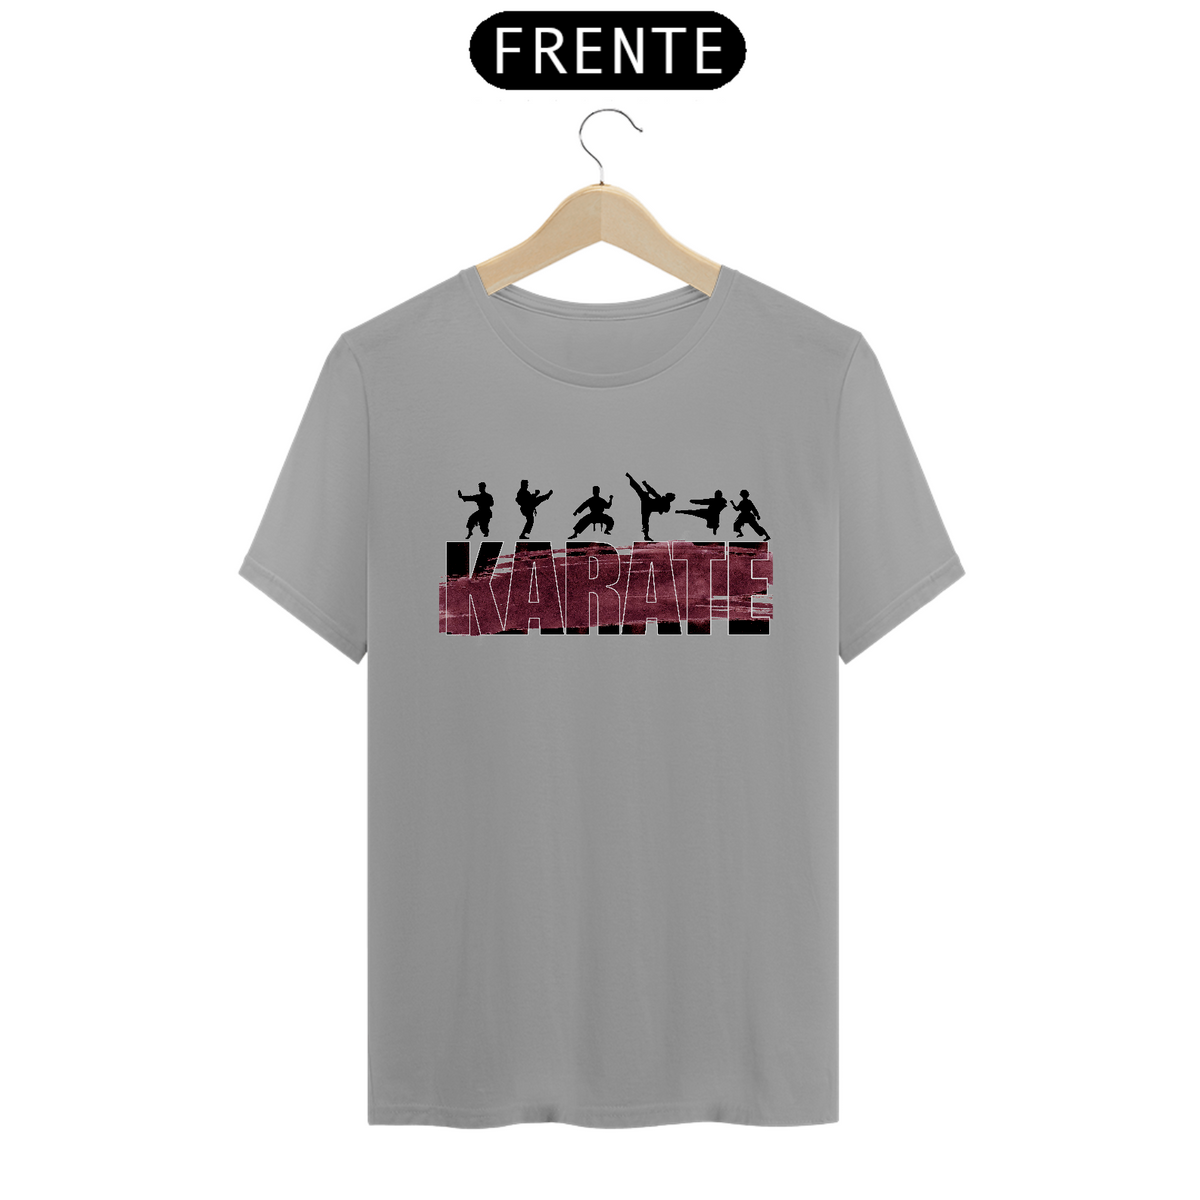 Nome do produto: Camiseta Karate 3